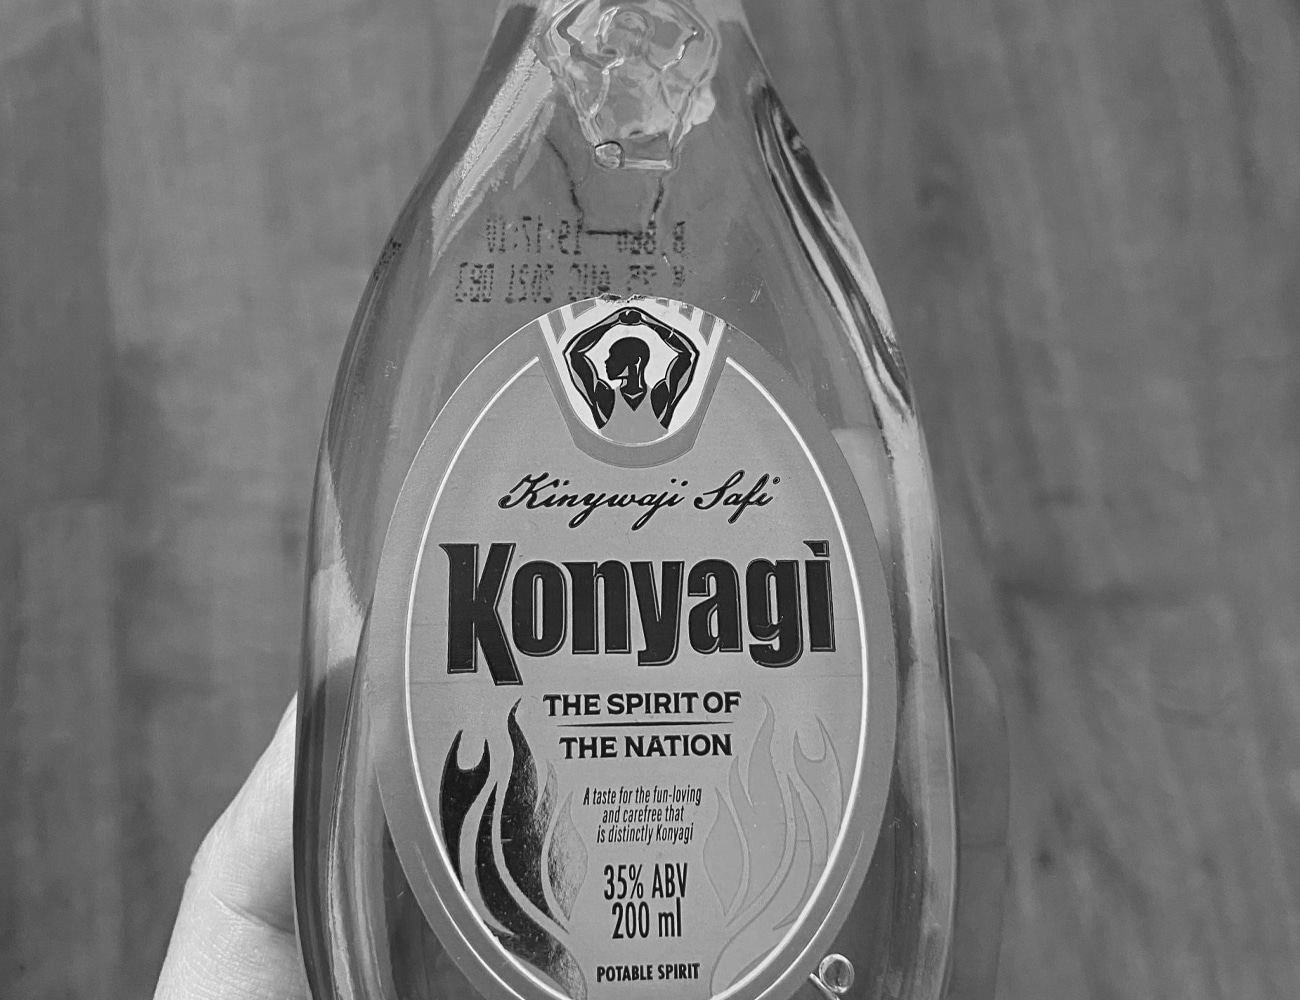 A Bottle of Konyagi, Tanzania Spirit